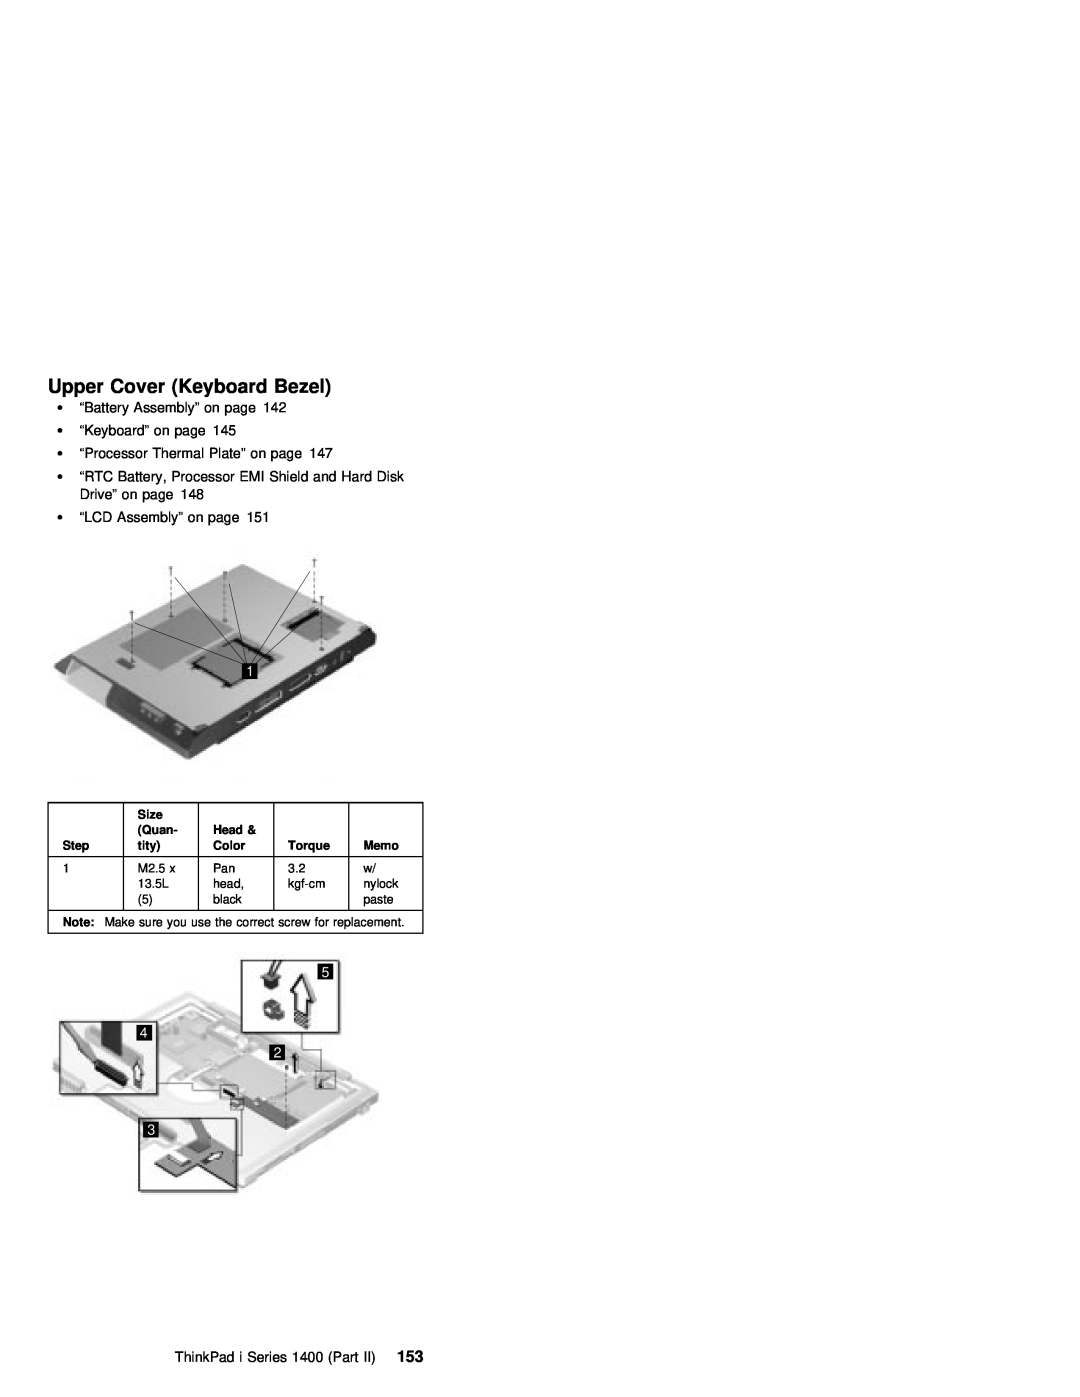 IBM 1400 (2611) Upper Cover Keyboard Bezel, Ÿ “Battery Assembly” on page Ÿ “Keyboard” on page, Ÿ “LCD Assembly” on page 